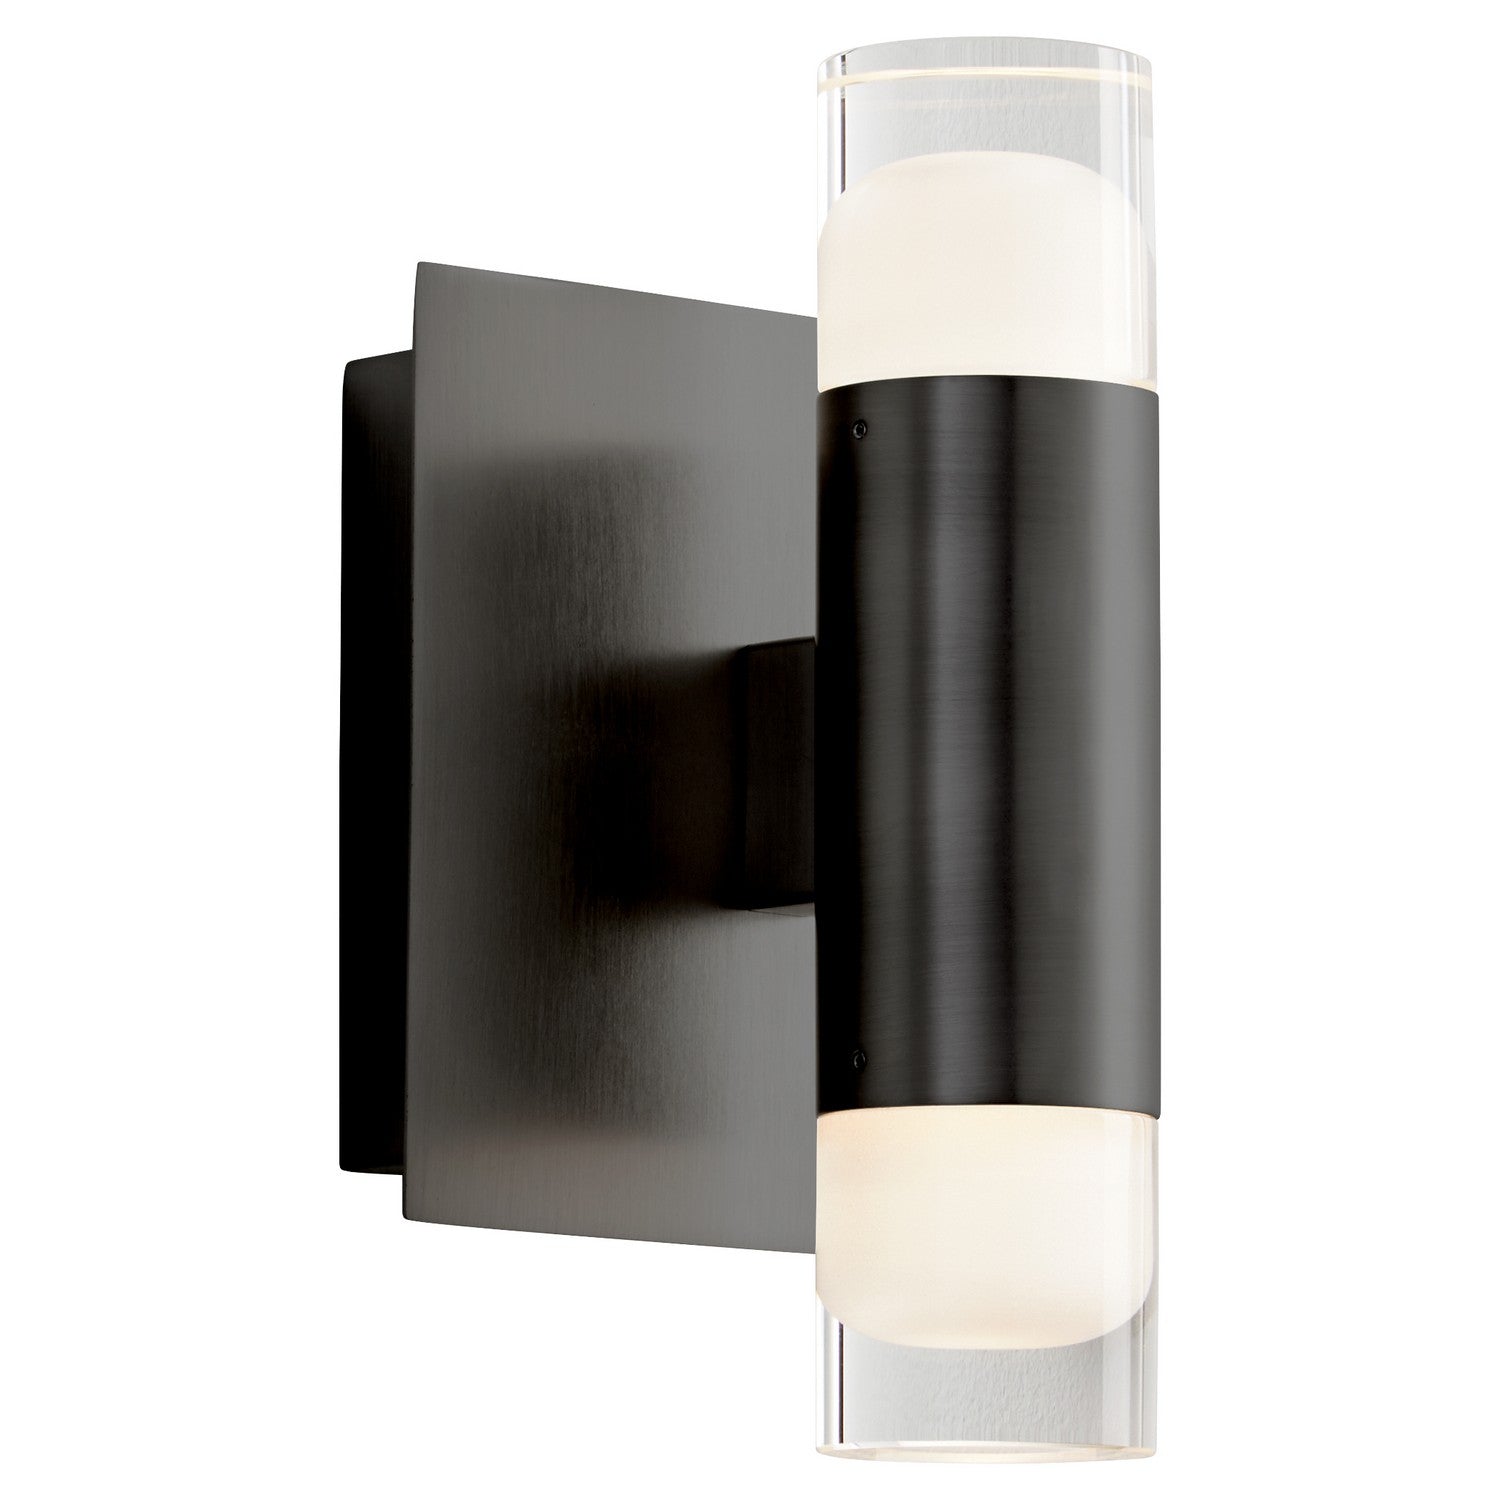 Oxygen Alarum 3-594-15 Wall Sconce Light - Black